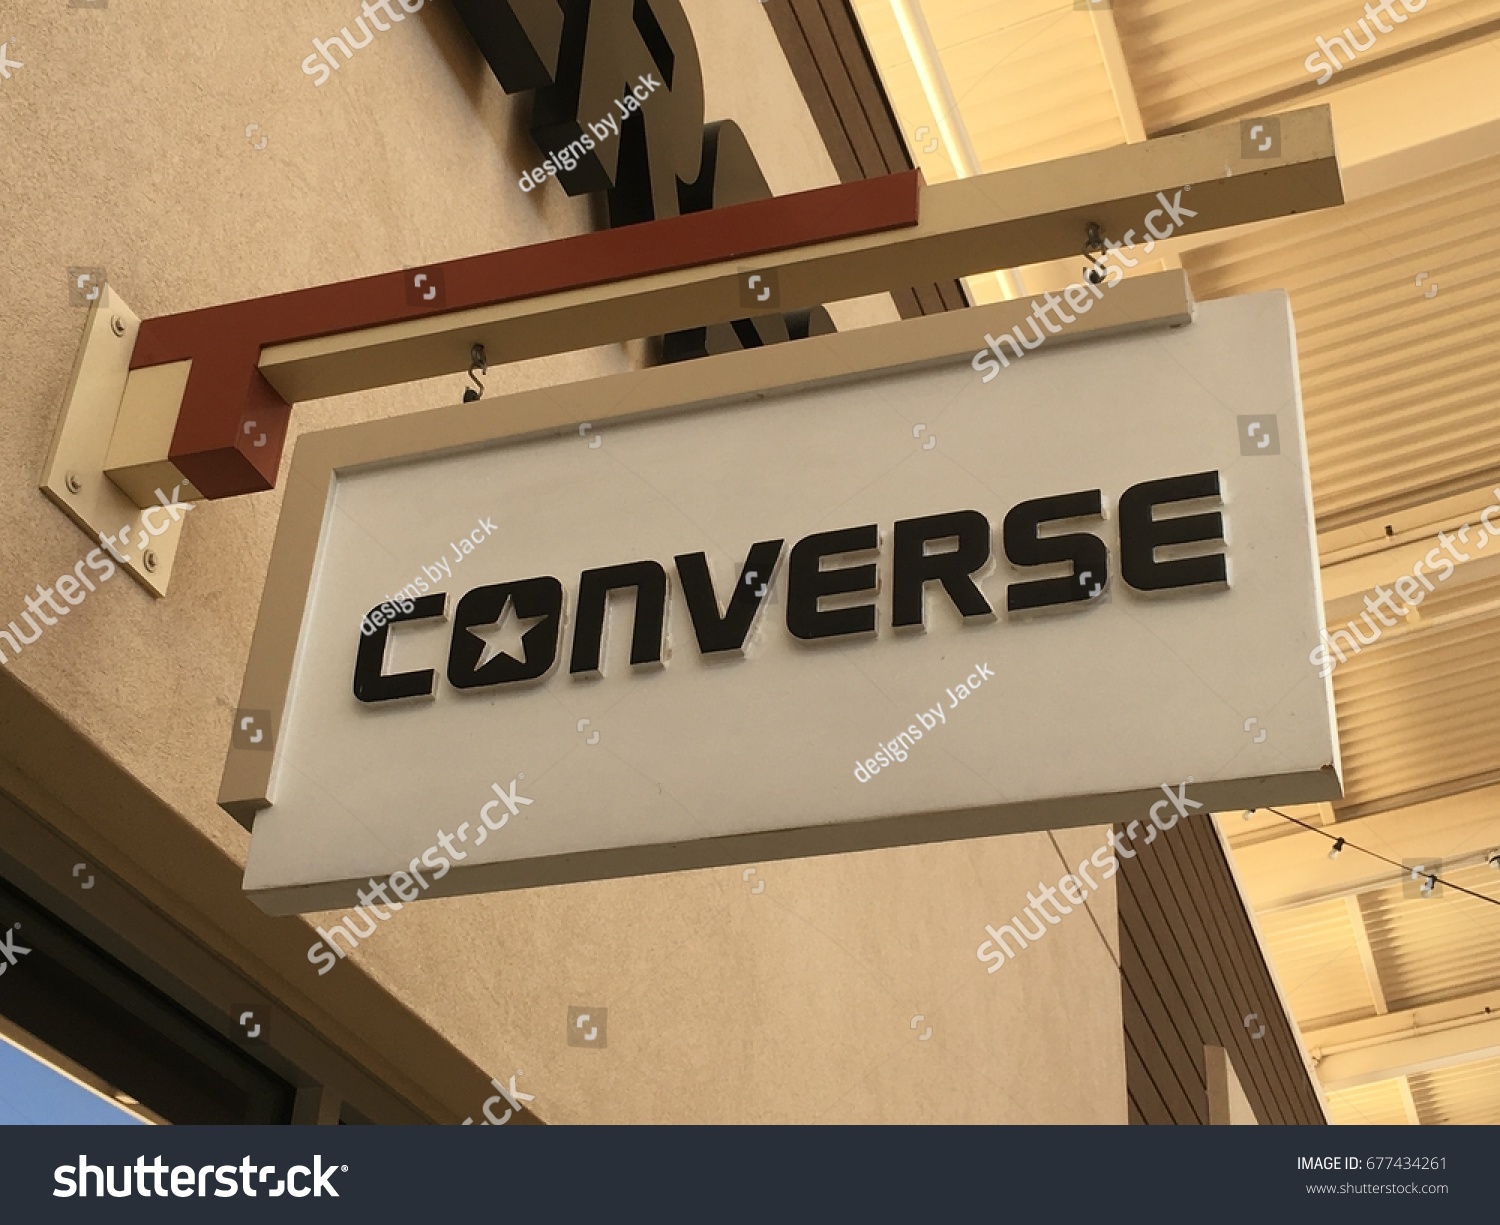 converse in phoenix mall